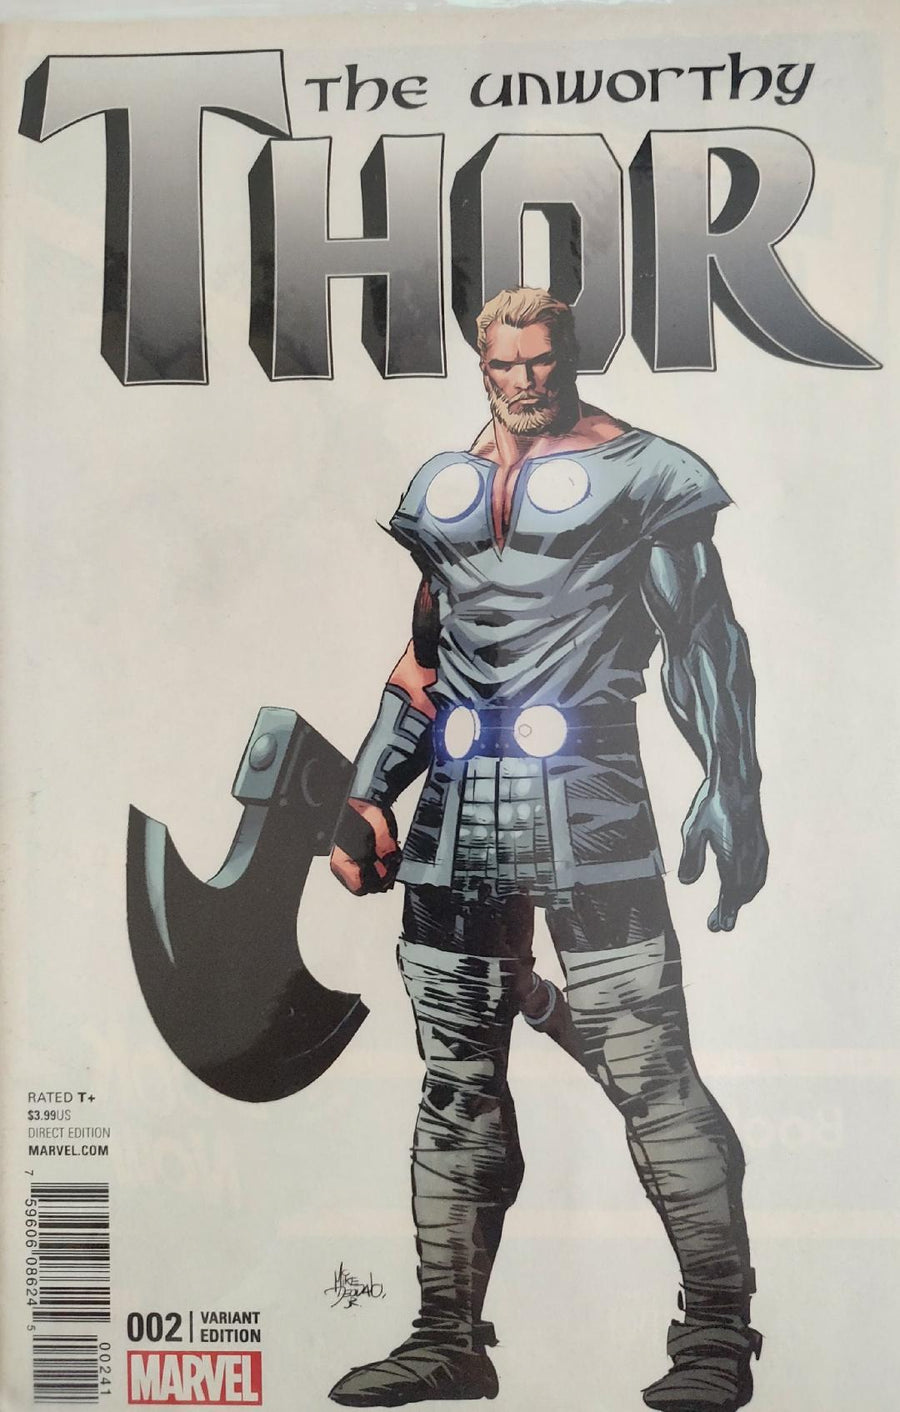 The Unworthy Thor #002 Comic Book